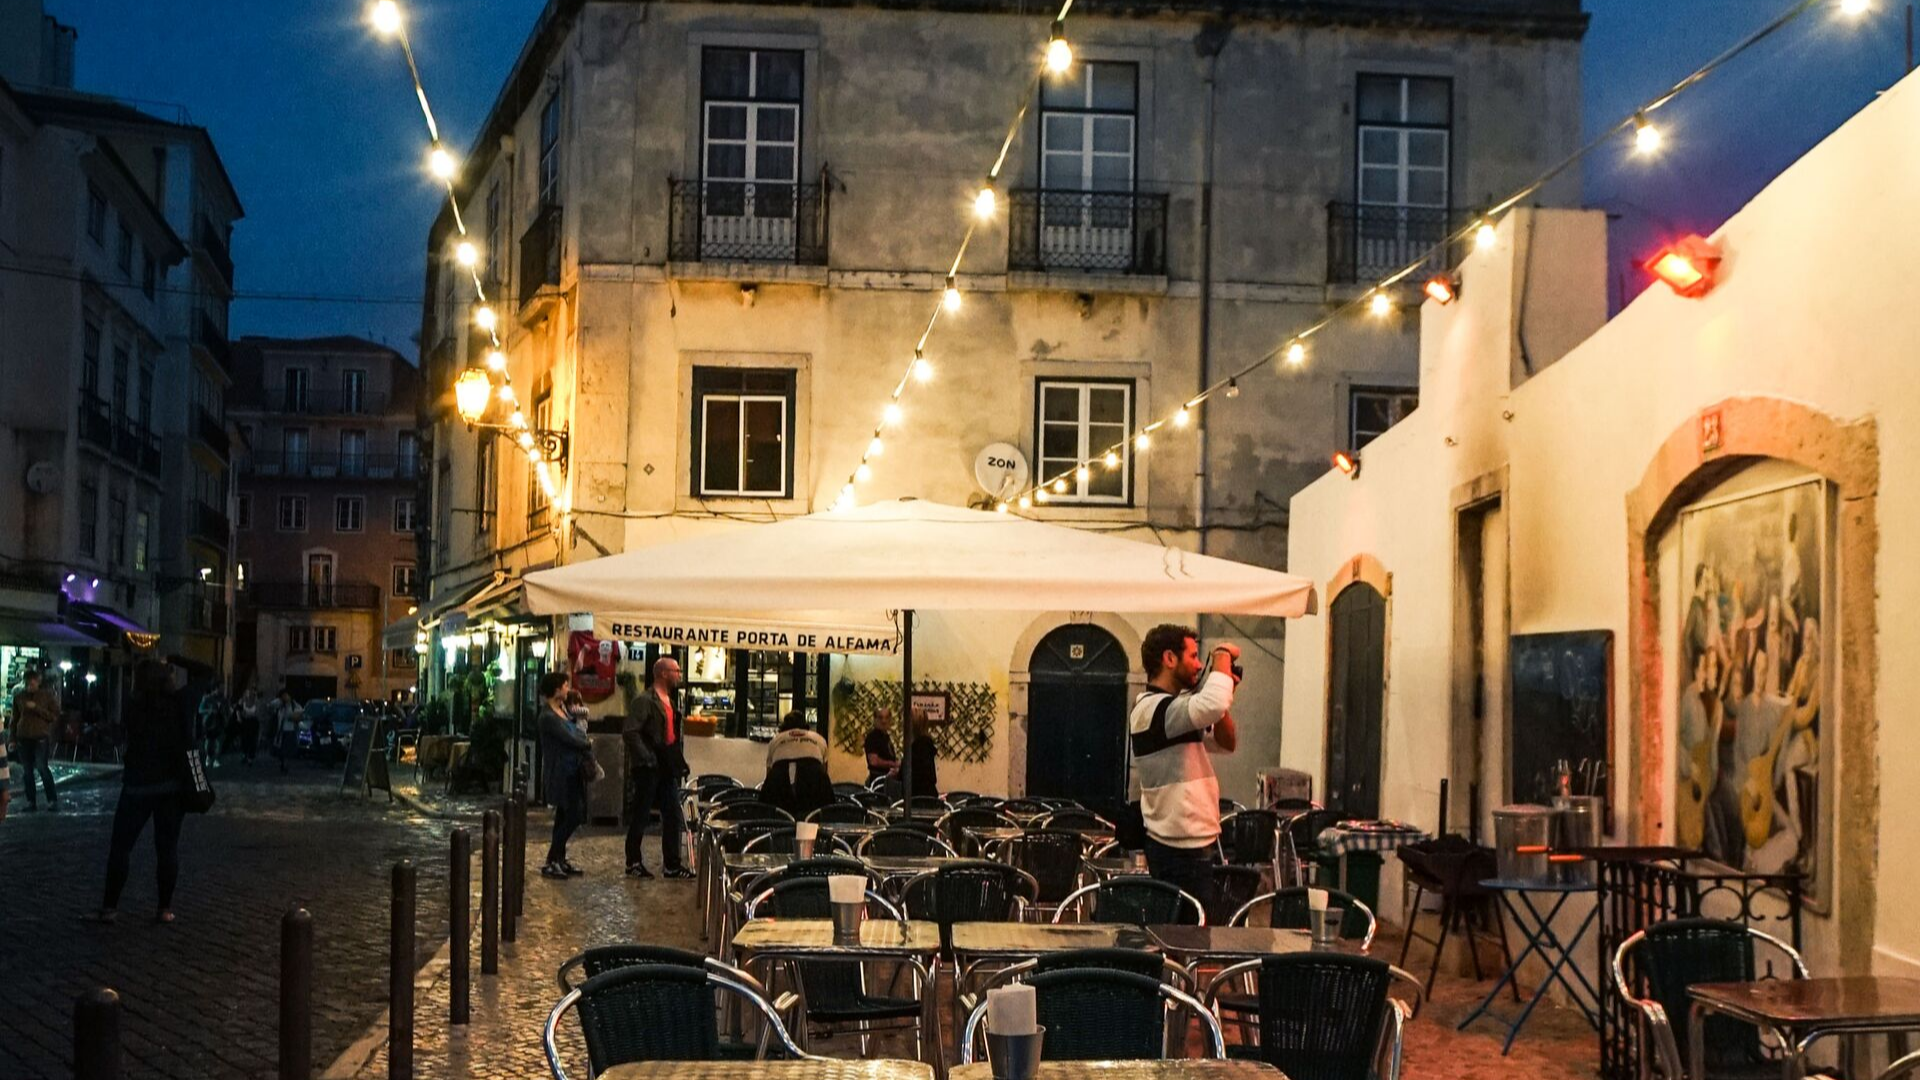 Outdoor cafe or restaurant lighting